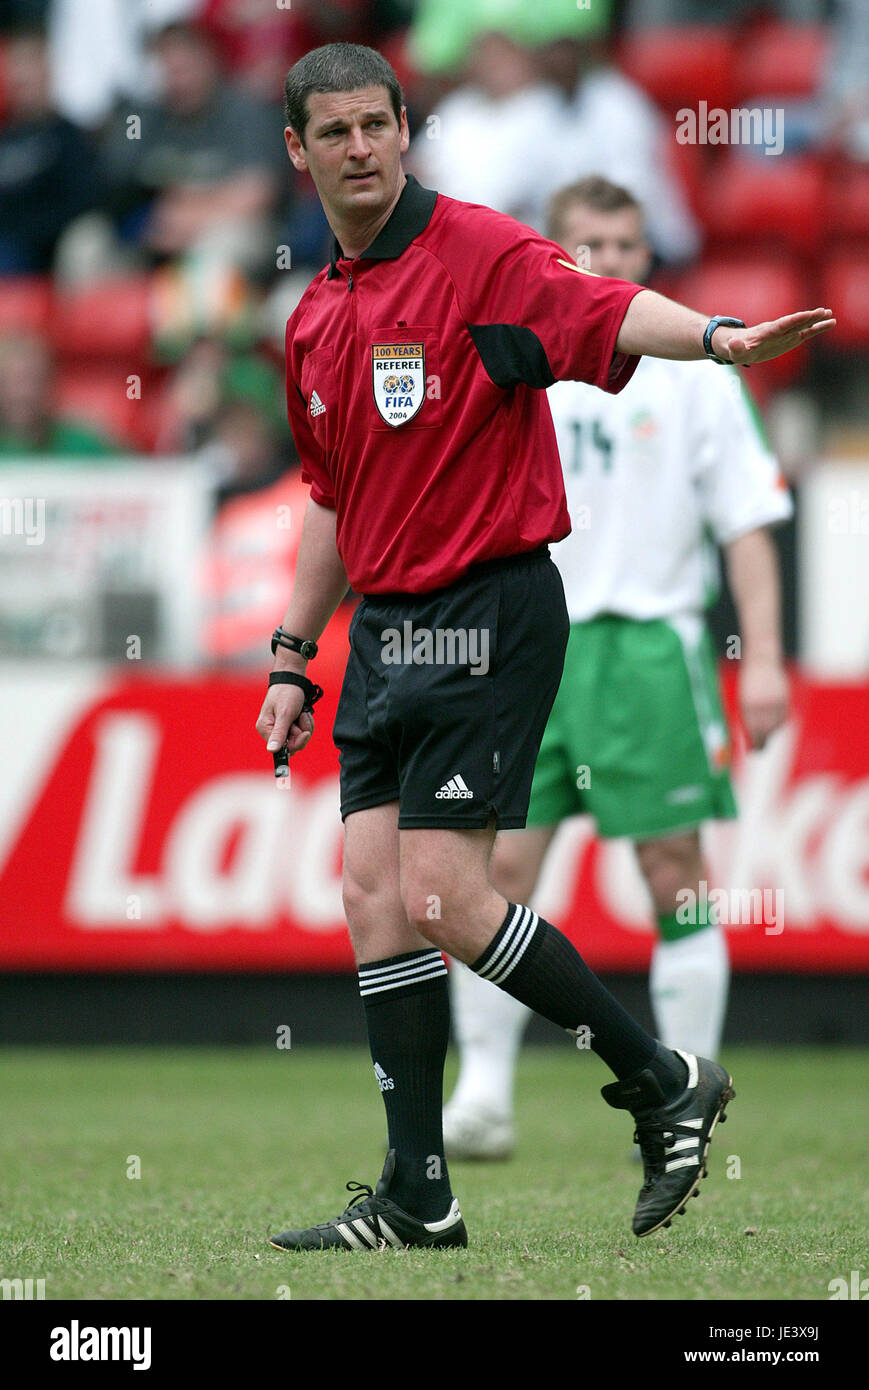 ANDY D'URSO FIFA REFEREE THE VALLEY CHARLTON ENGLAND 29 May 2004 Stock Photo